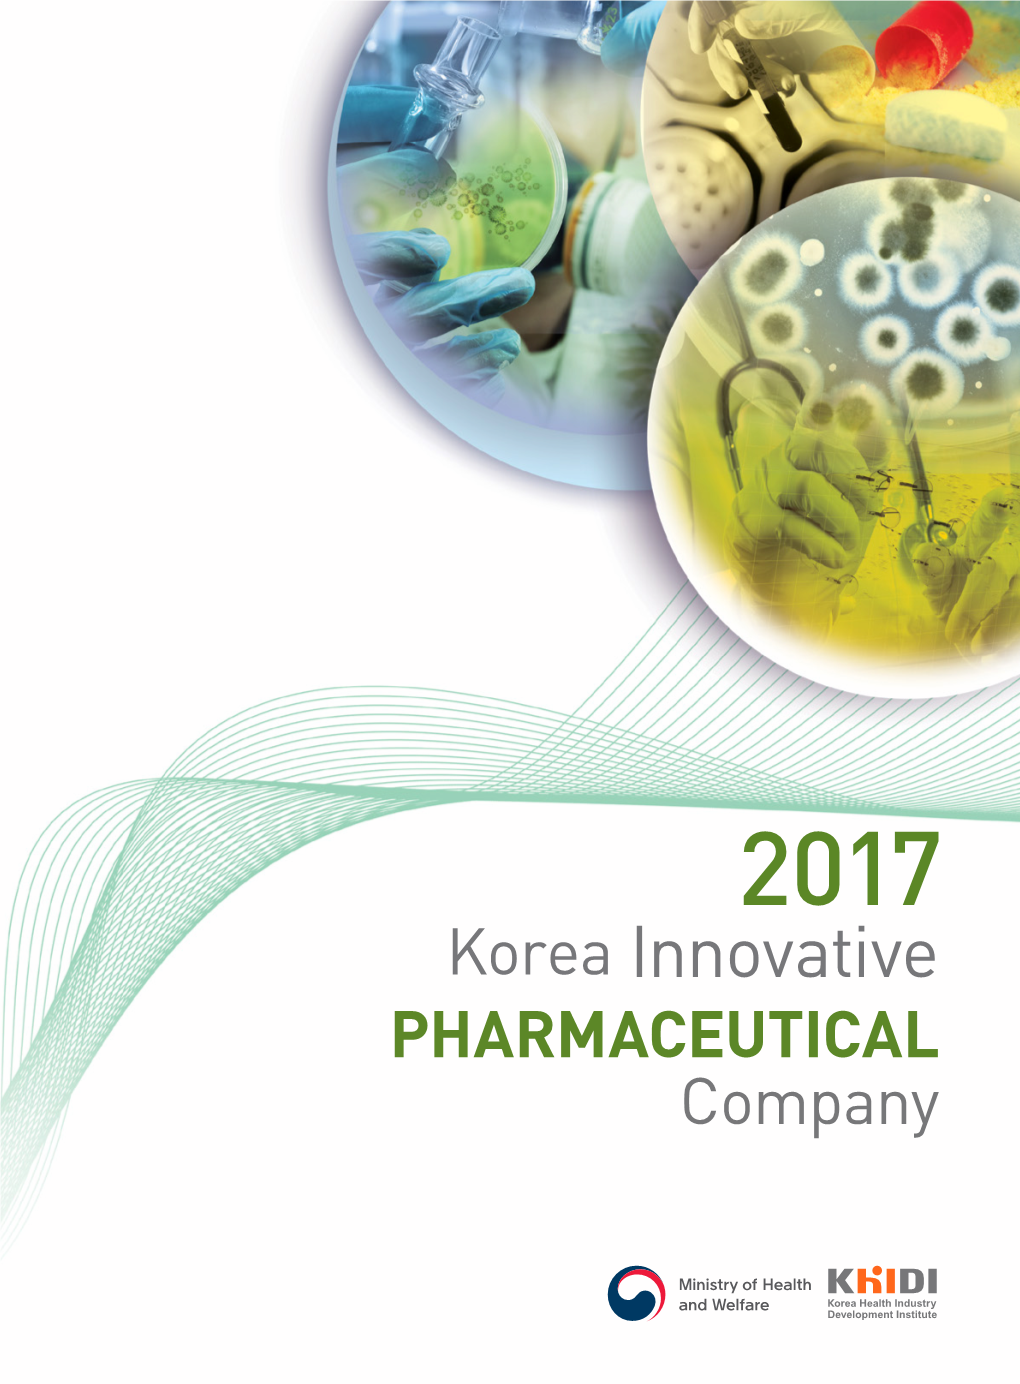 Korea Innovative PHARMACEUTICAL Company Potential of Pharmaceutical Industry in Korea